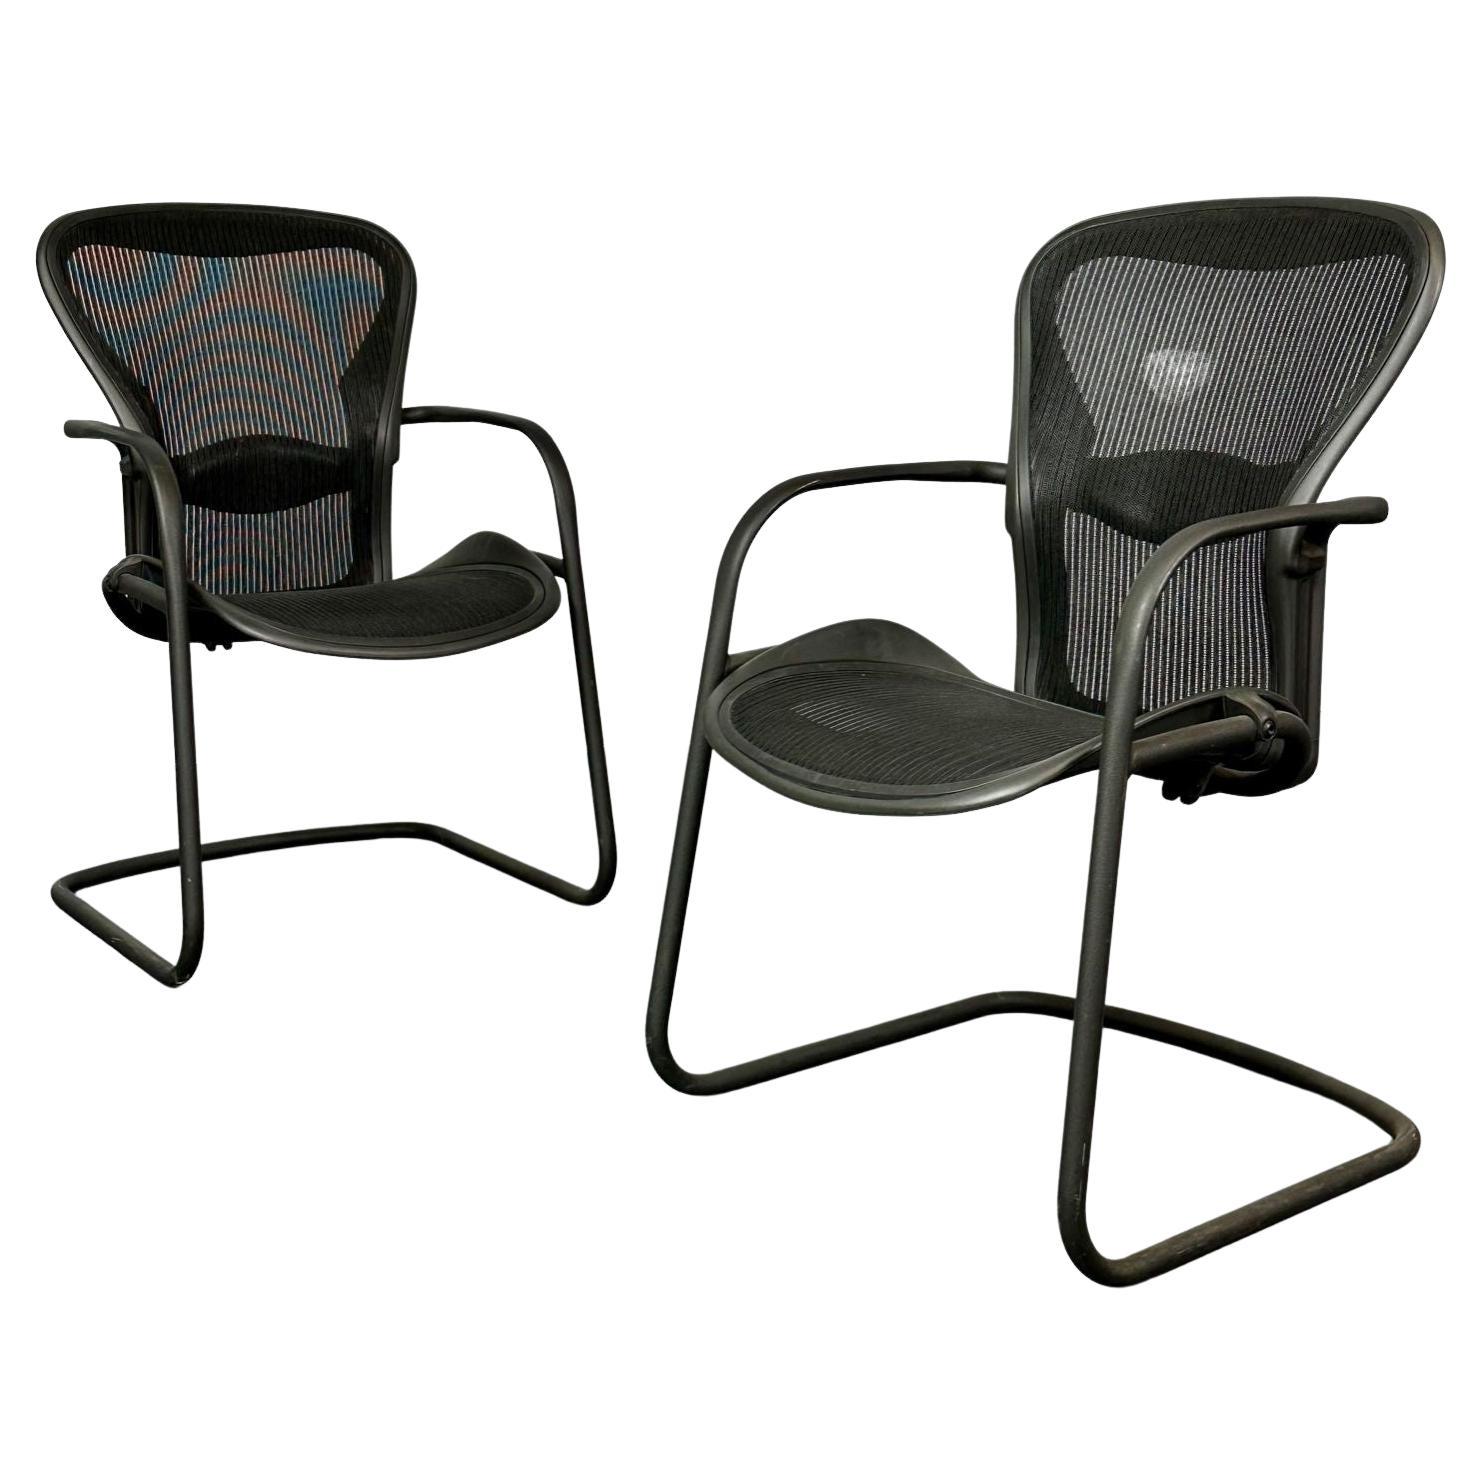 Pair of Stamped Herman Miller Mid-Century Modern Desk / Office Chairs, Aluminum